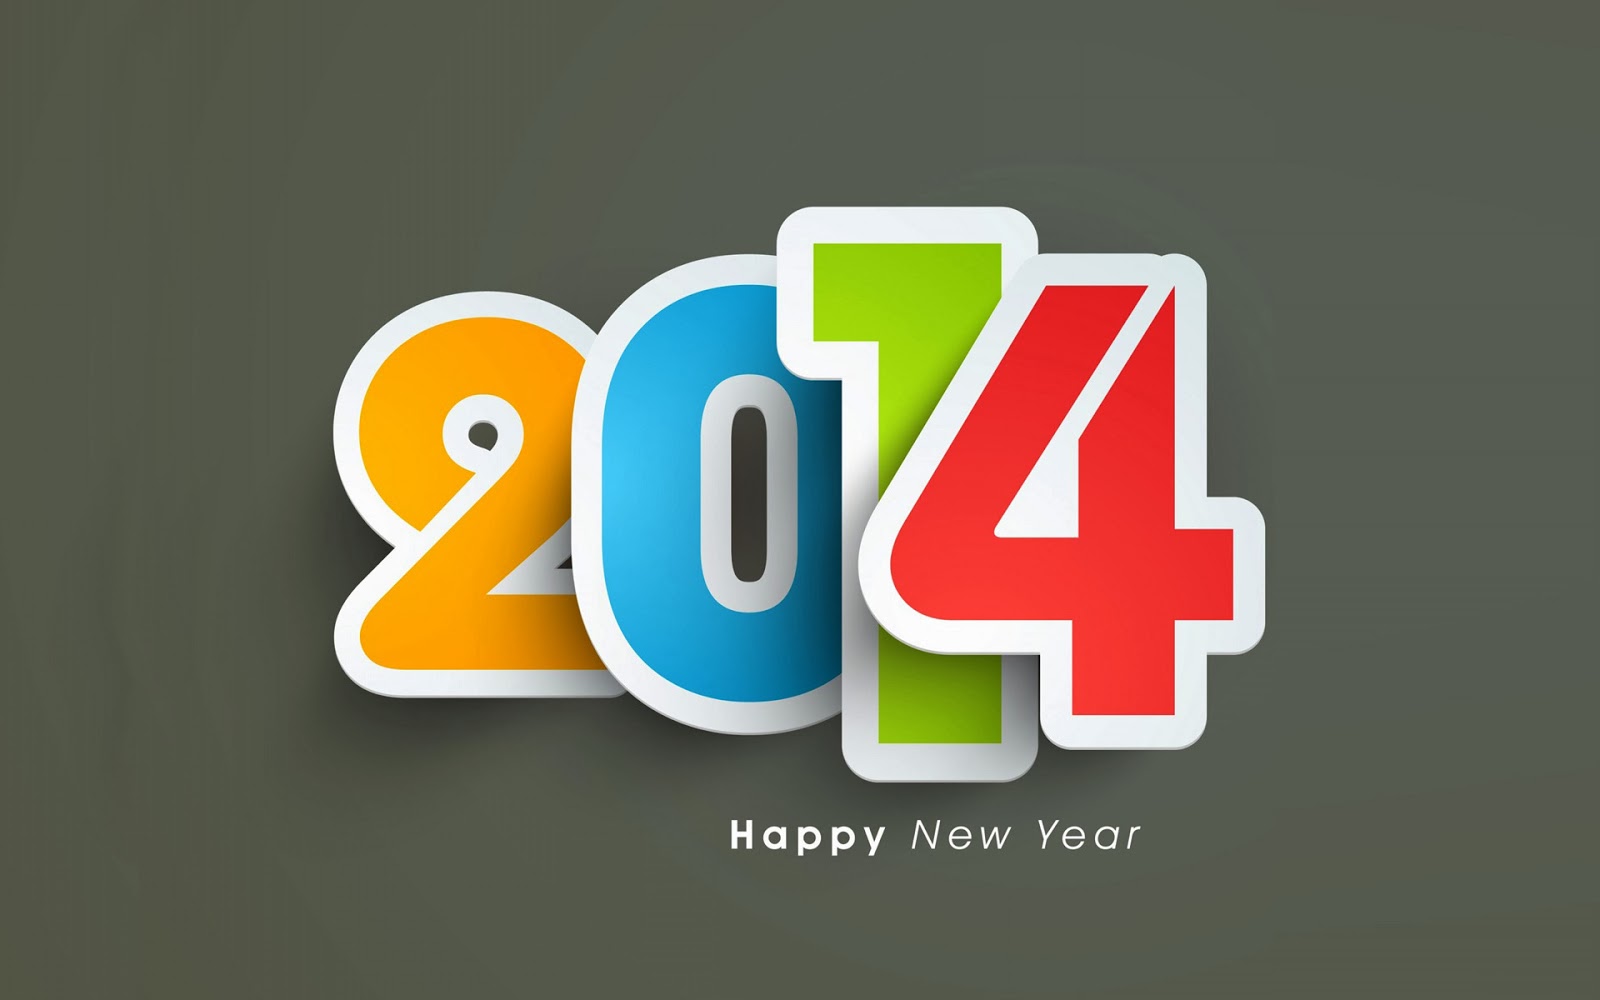 Mutlu Yıllar 2014 Resimler, Wallpapers, Wallpaper